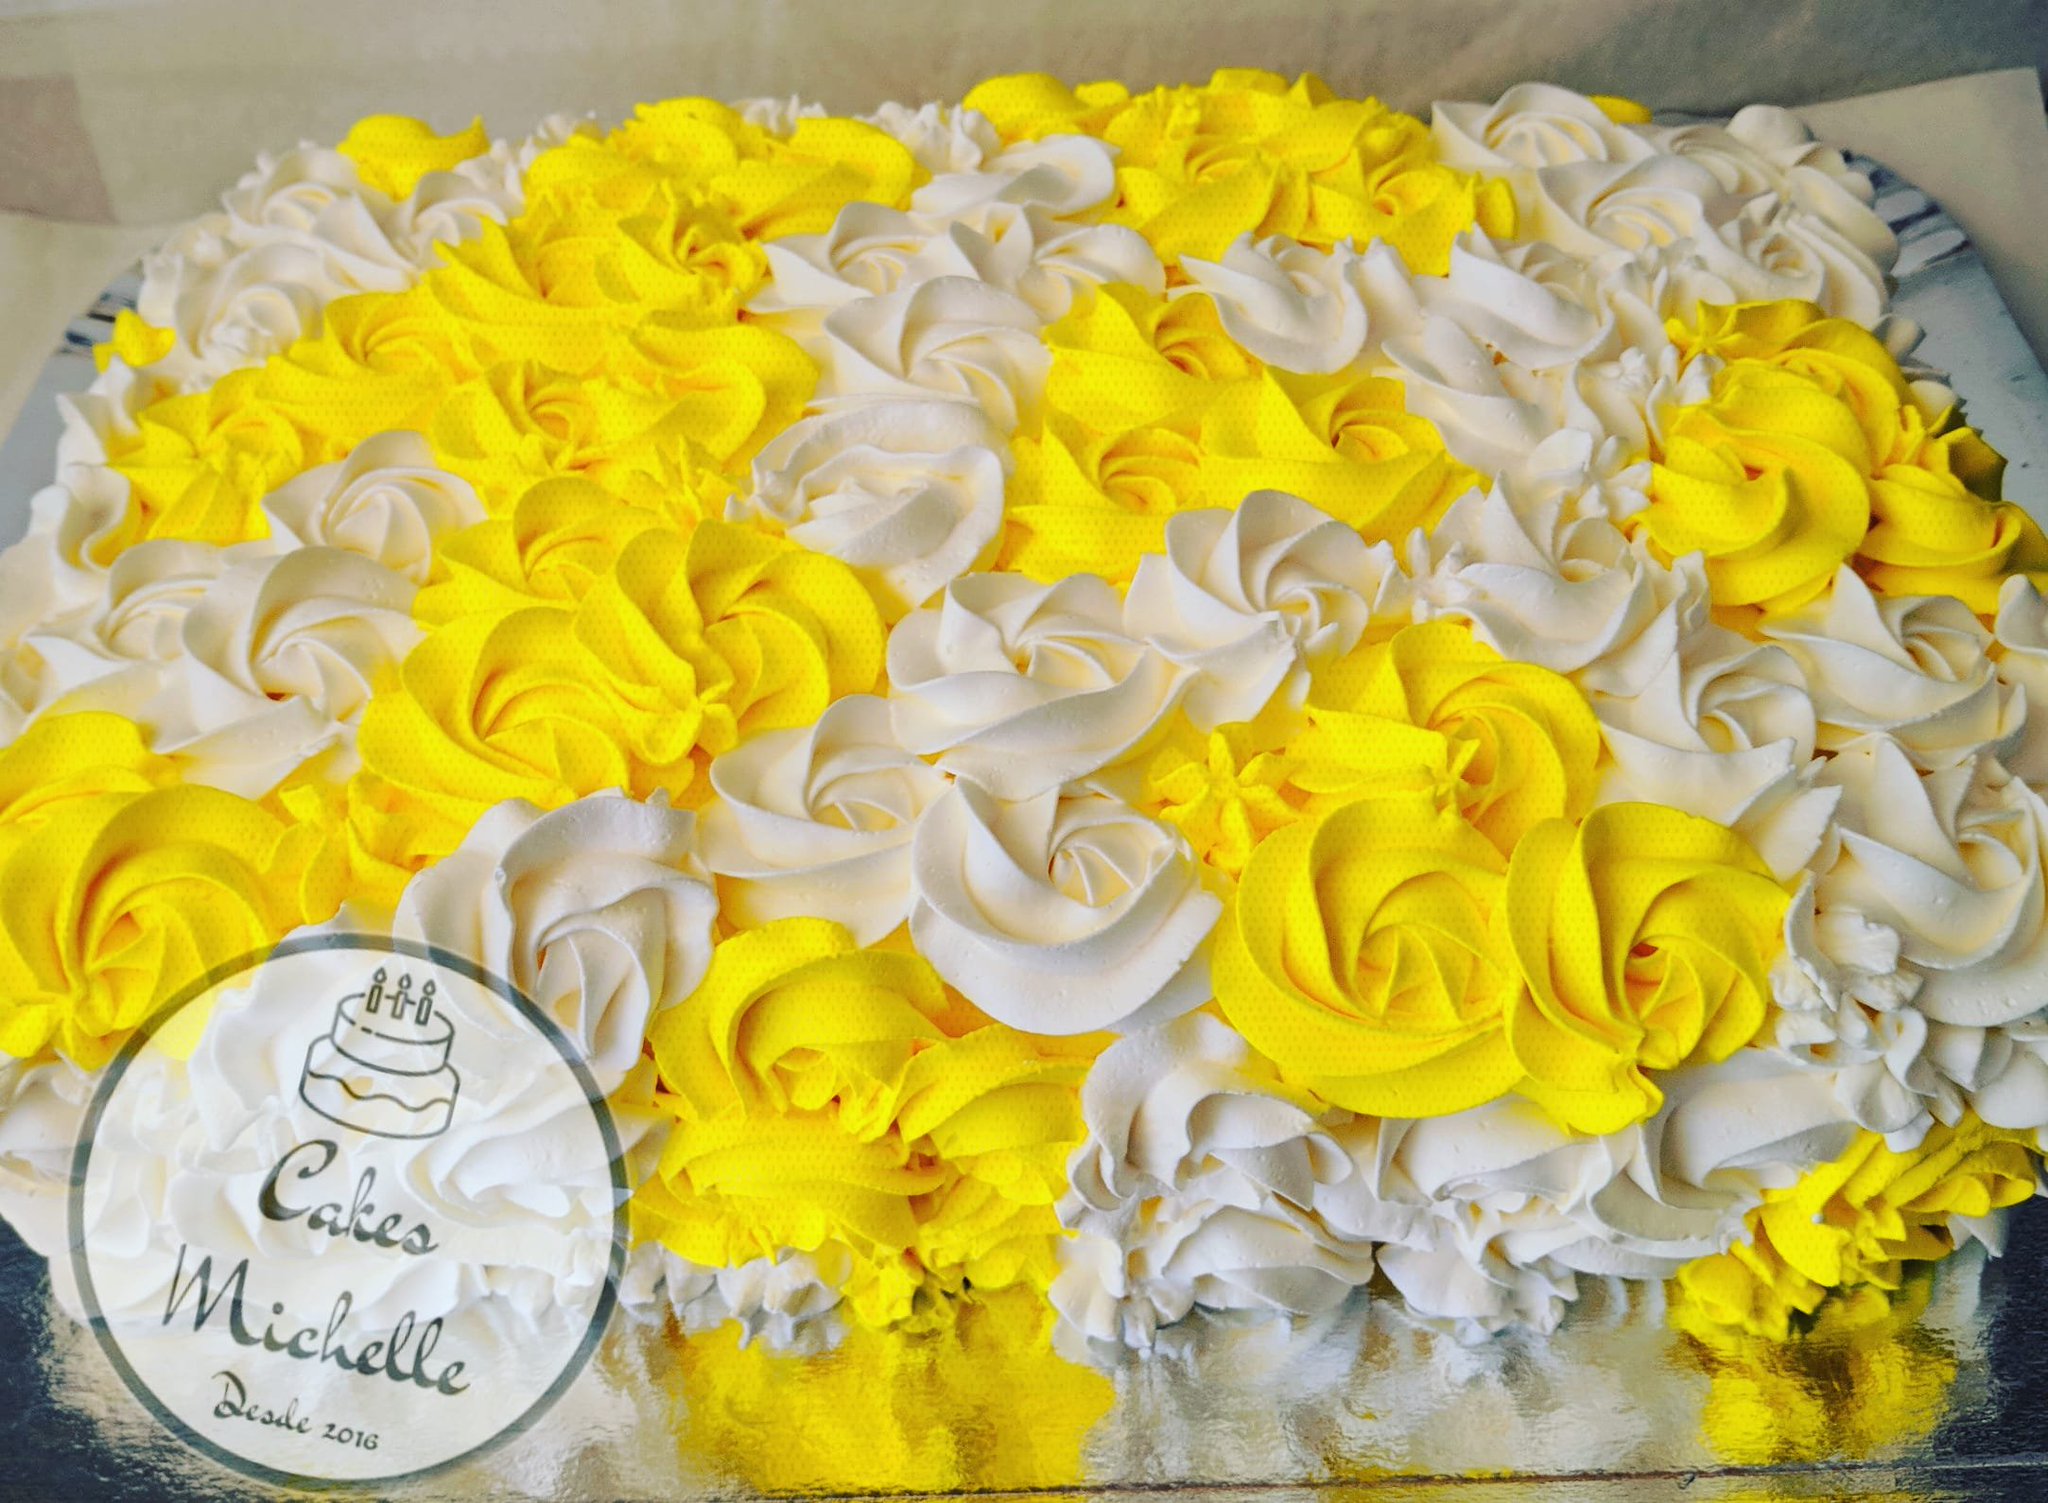 Cakes Michelle on X: Bolo decorado em chantilly com tema Maquiagem  🎂🍰🥧🥞 #cakes #bolos #chantilly #cakesmichelle #sweet #bolosdecorados  #cakedesigner #confeitaria #loveconfeitaria #maquiagem #bolofeminino   / X